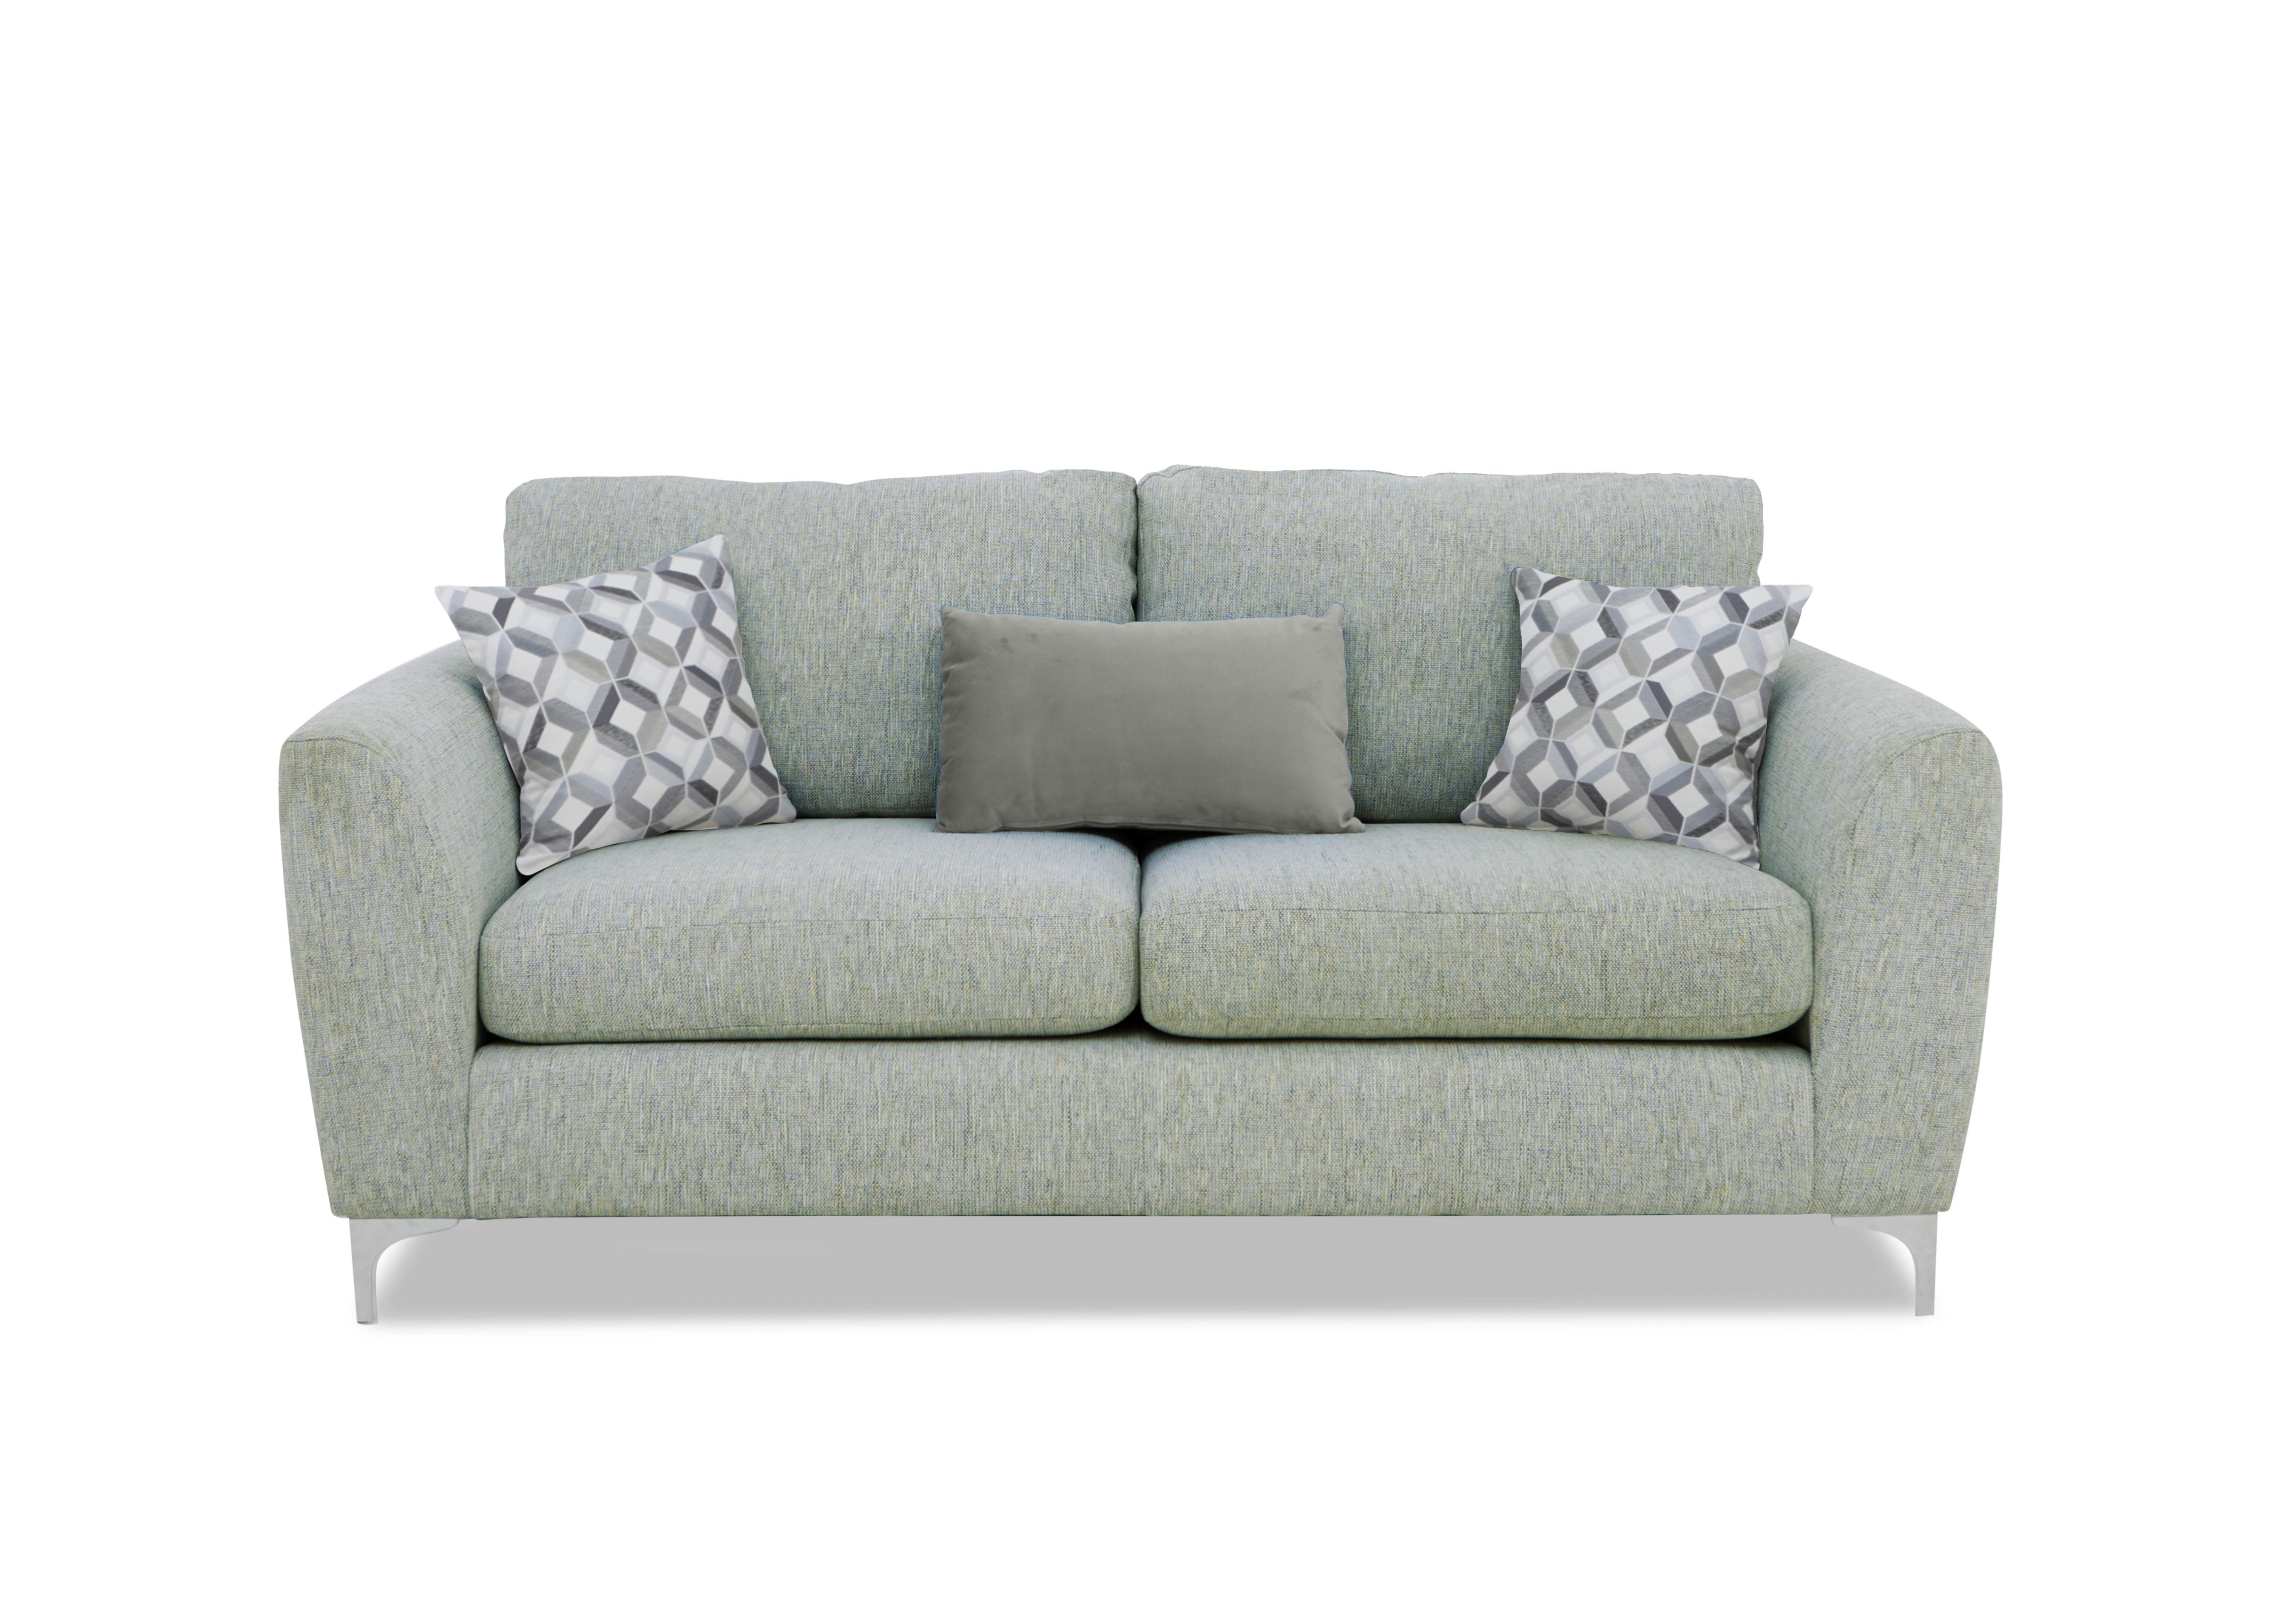 Pippa 3 Seater Fabric Sofa in Eau Ebony Ch Ft on Furniture Village